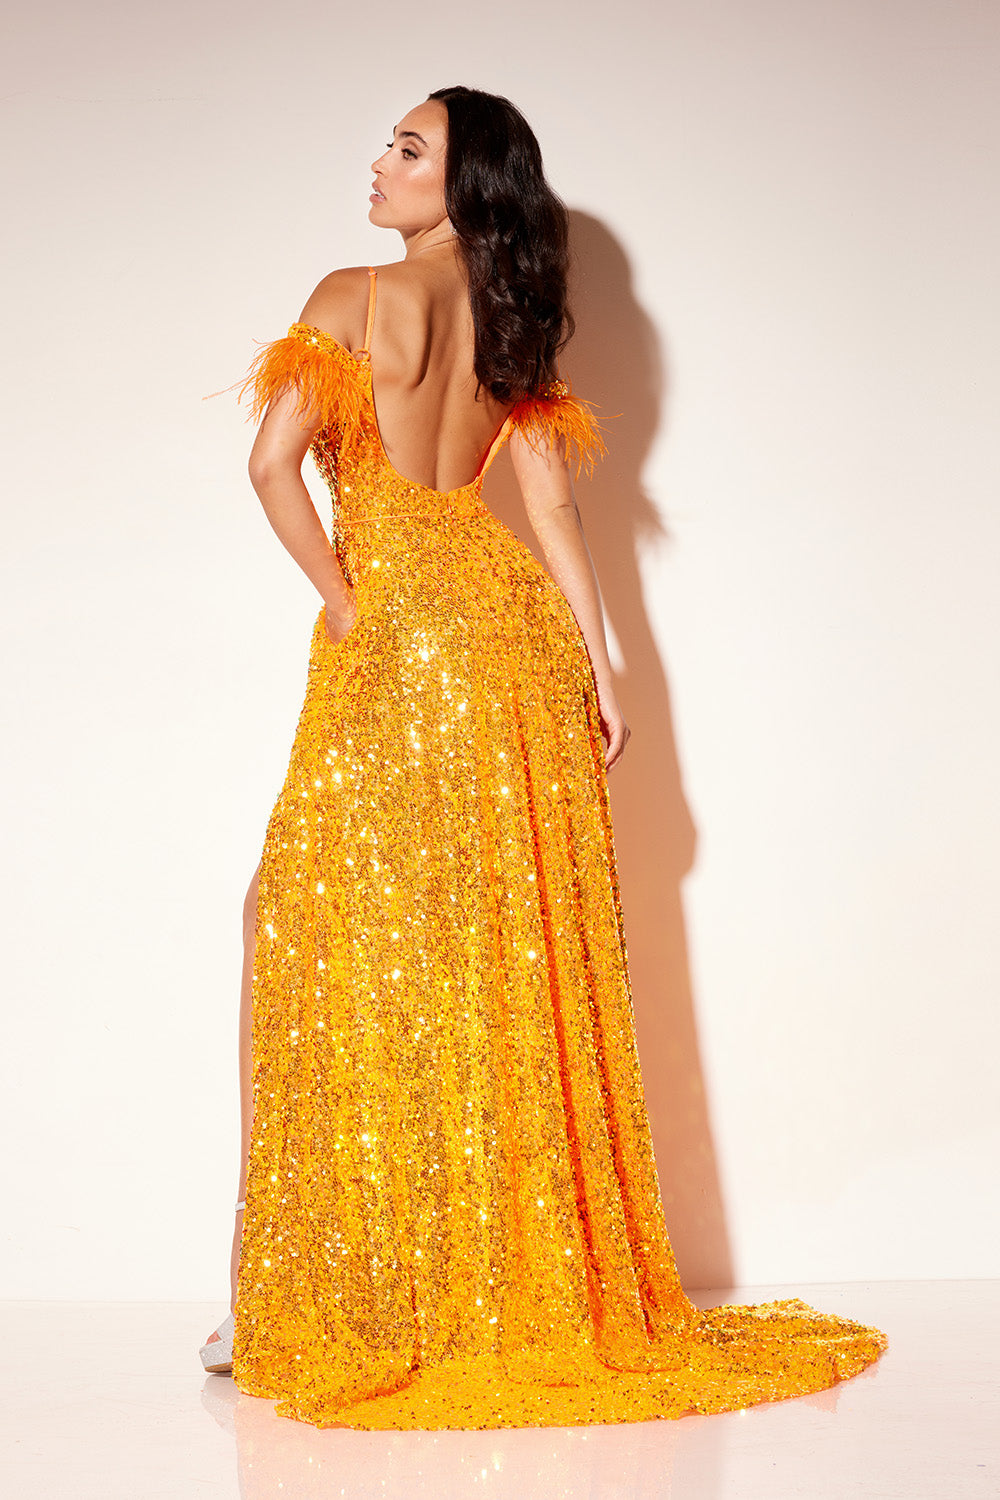 Lucci-Lu-1305-Deep-V-Neckline-Backless-High-Slit-Sequins-Feathers-A-Line-Orange-Evening-Dress-B-Chic-Fashions-Prom-Dress